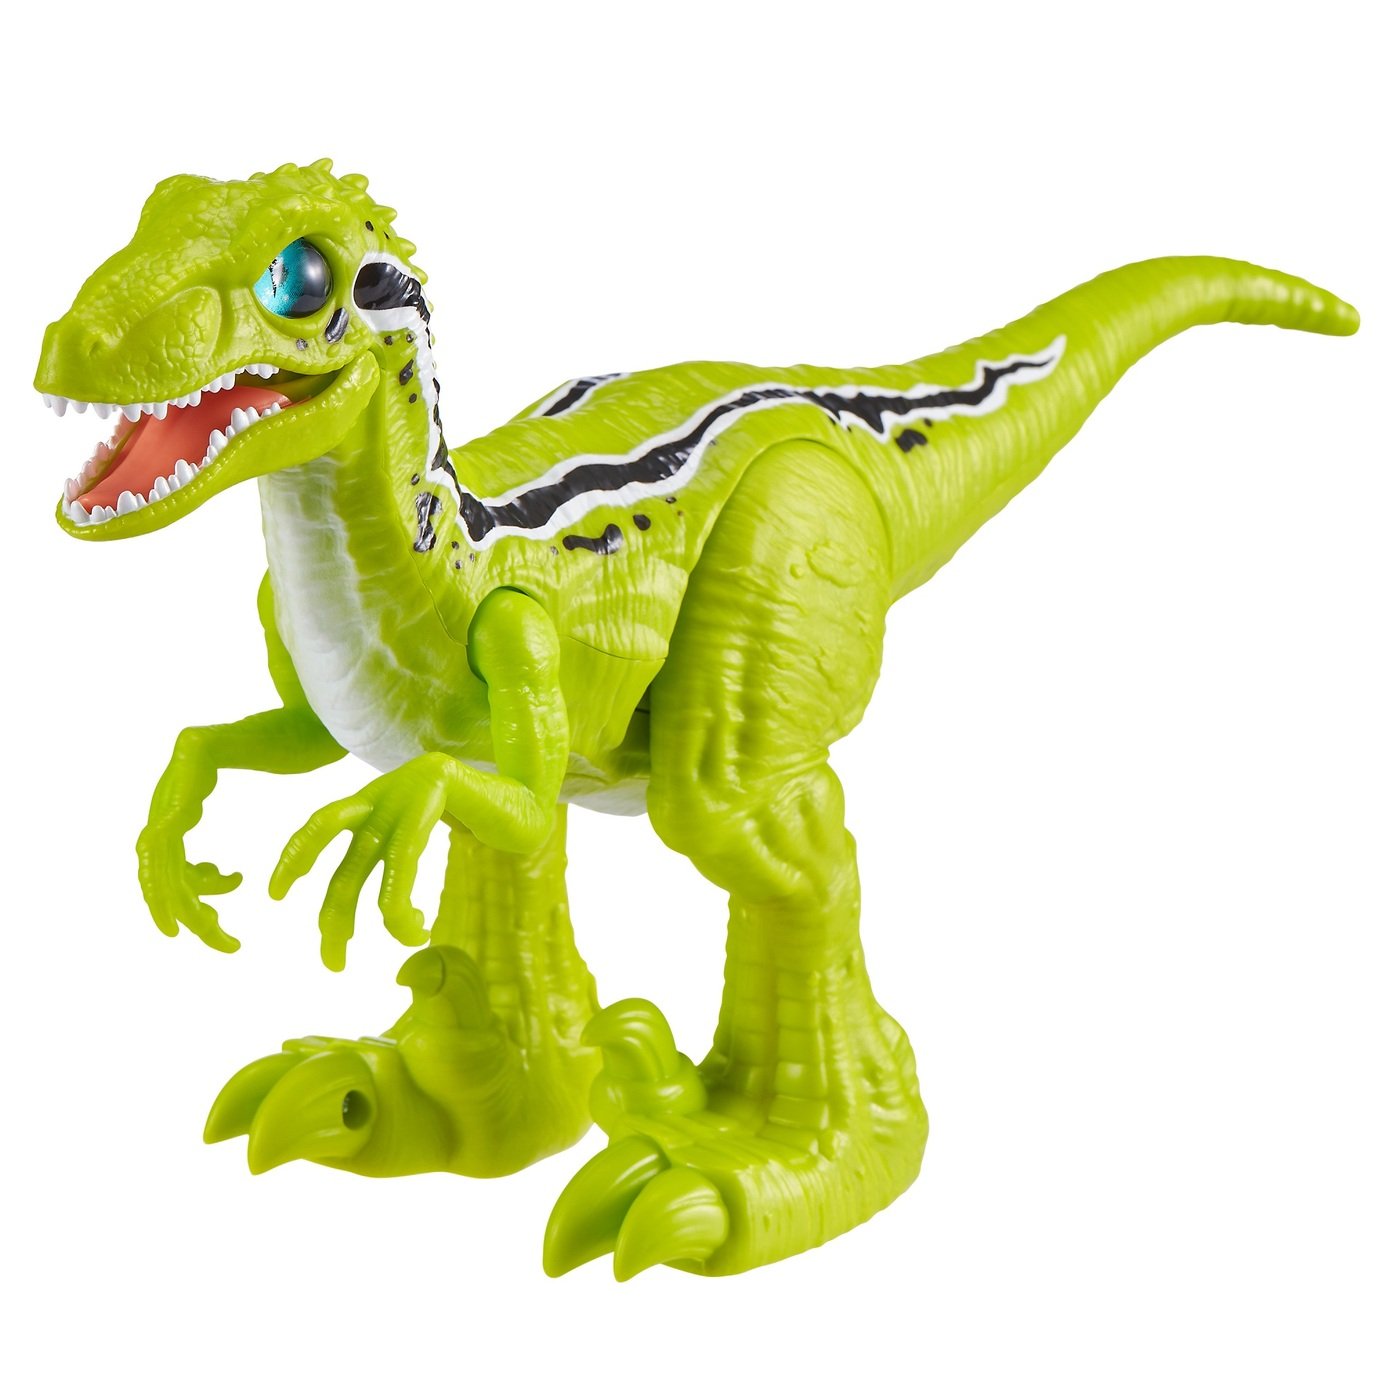 Robo Alive Rampaging Raptor Dinosaur Toy Review